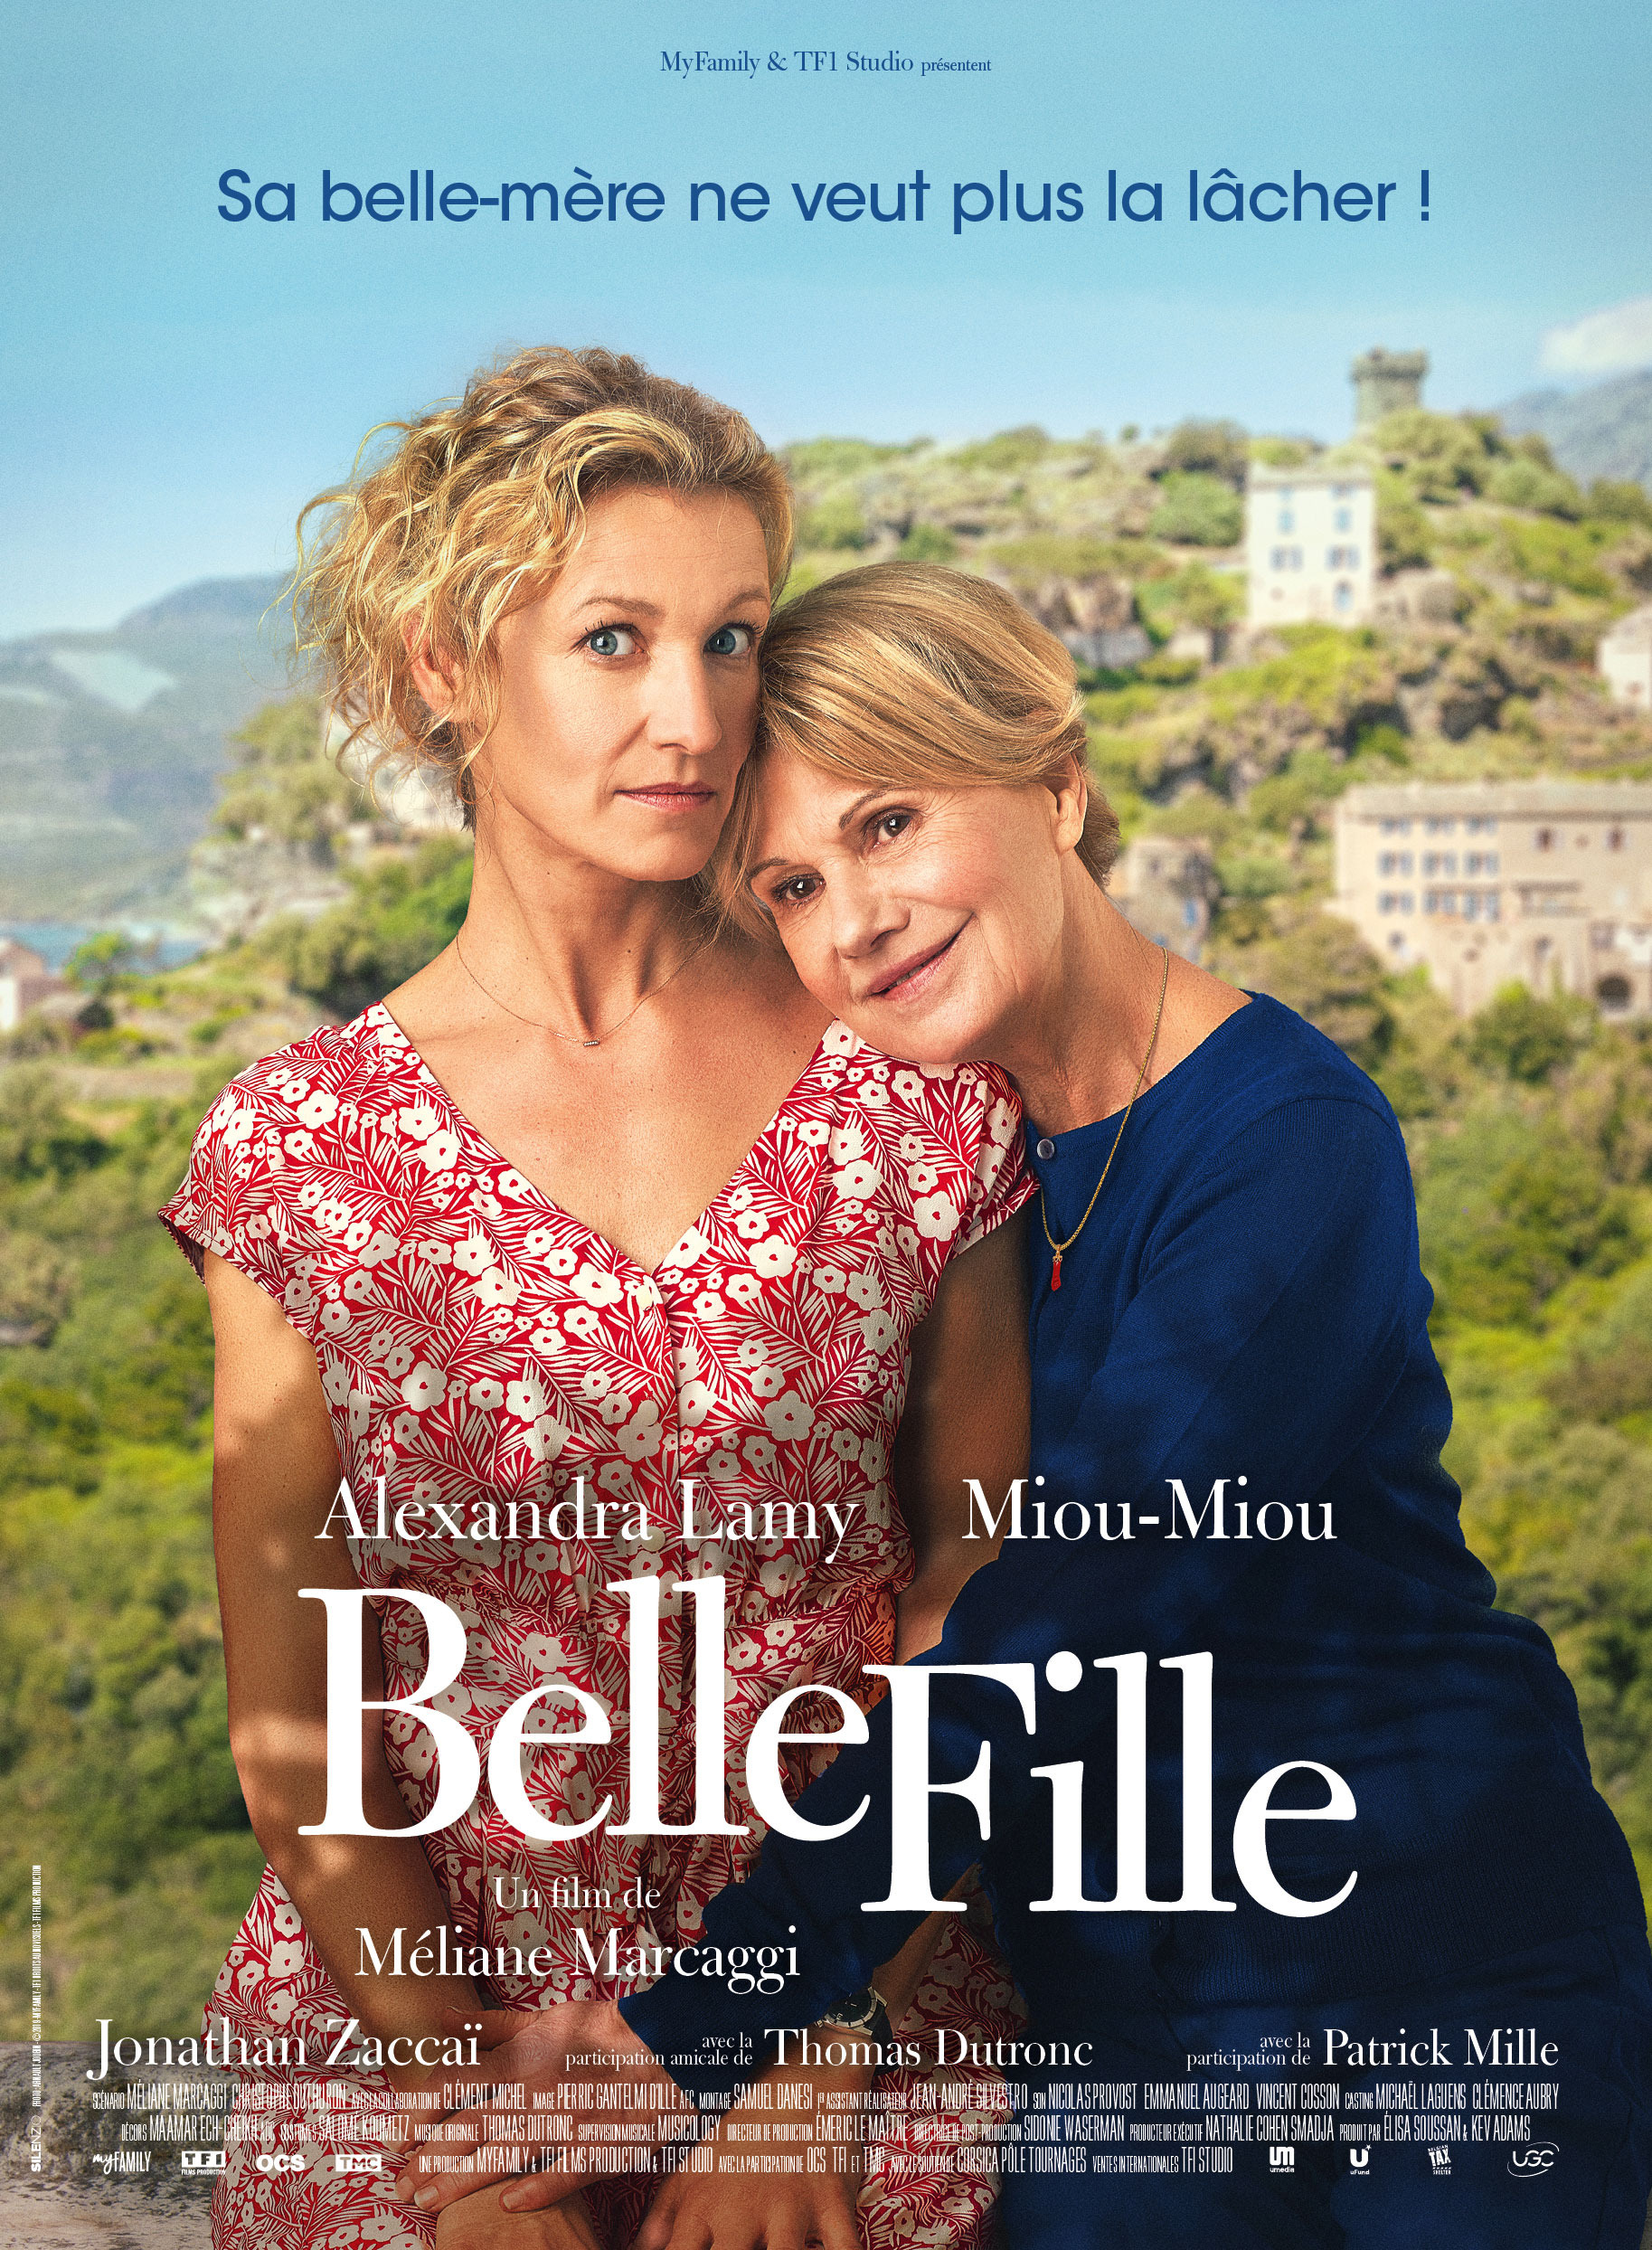 Mega Sized Movie Poster Image for Belle fille (#1 of 2)